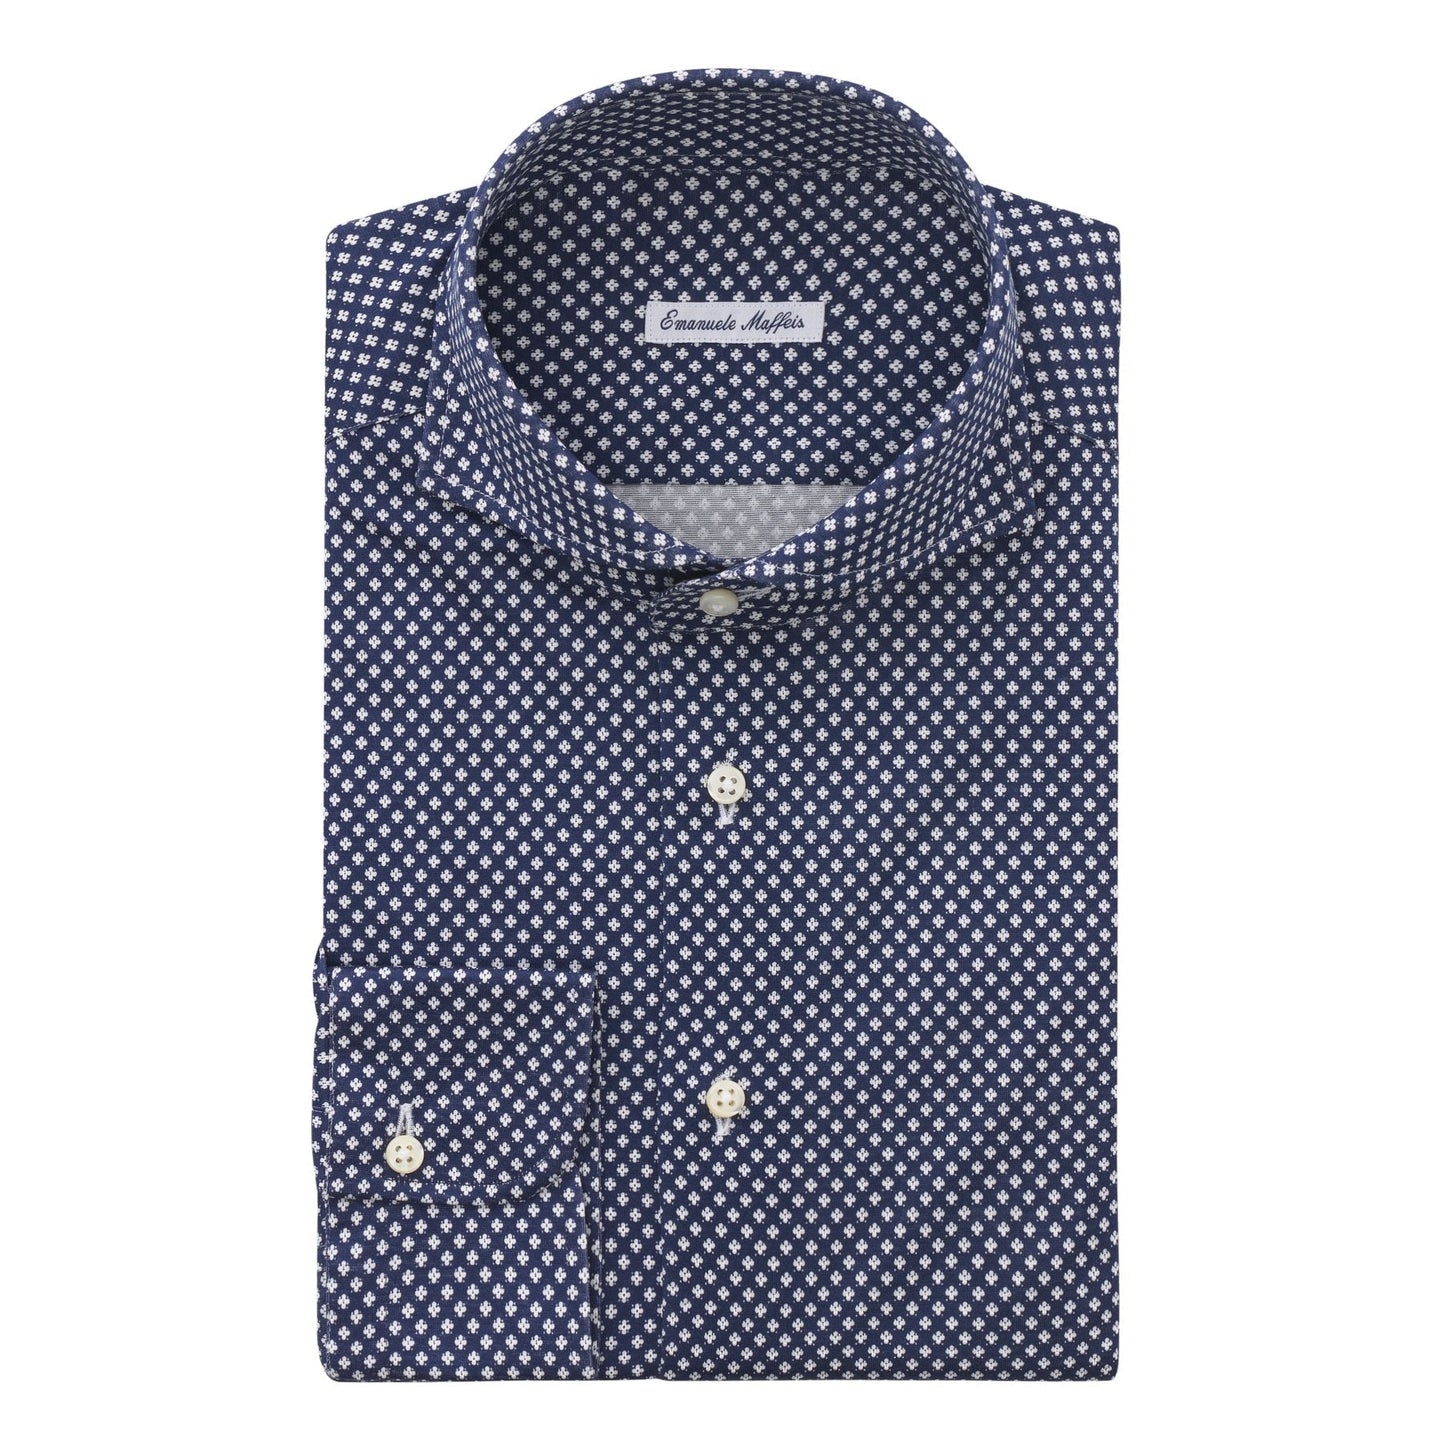 Emanuele Maffeis Jersey-Cotton Dark Blue Shirt with Flower Print - SARTALE